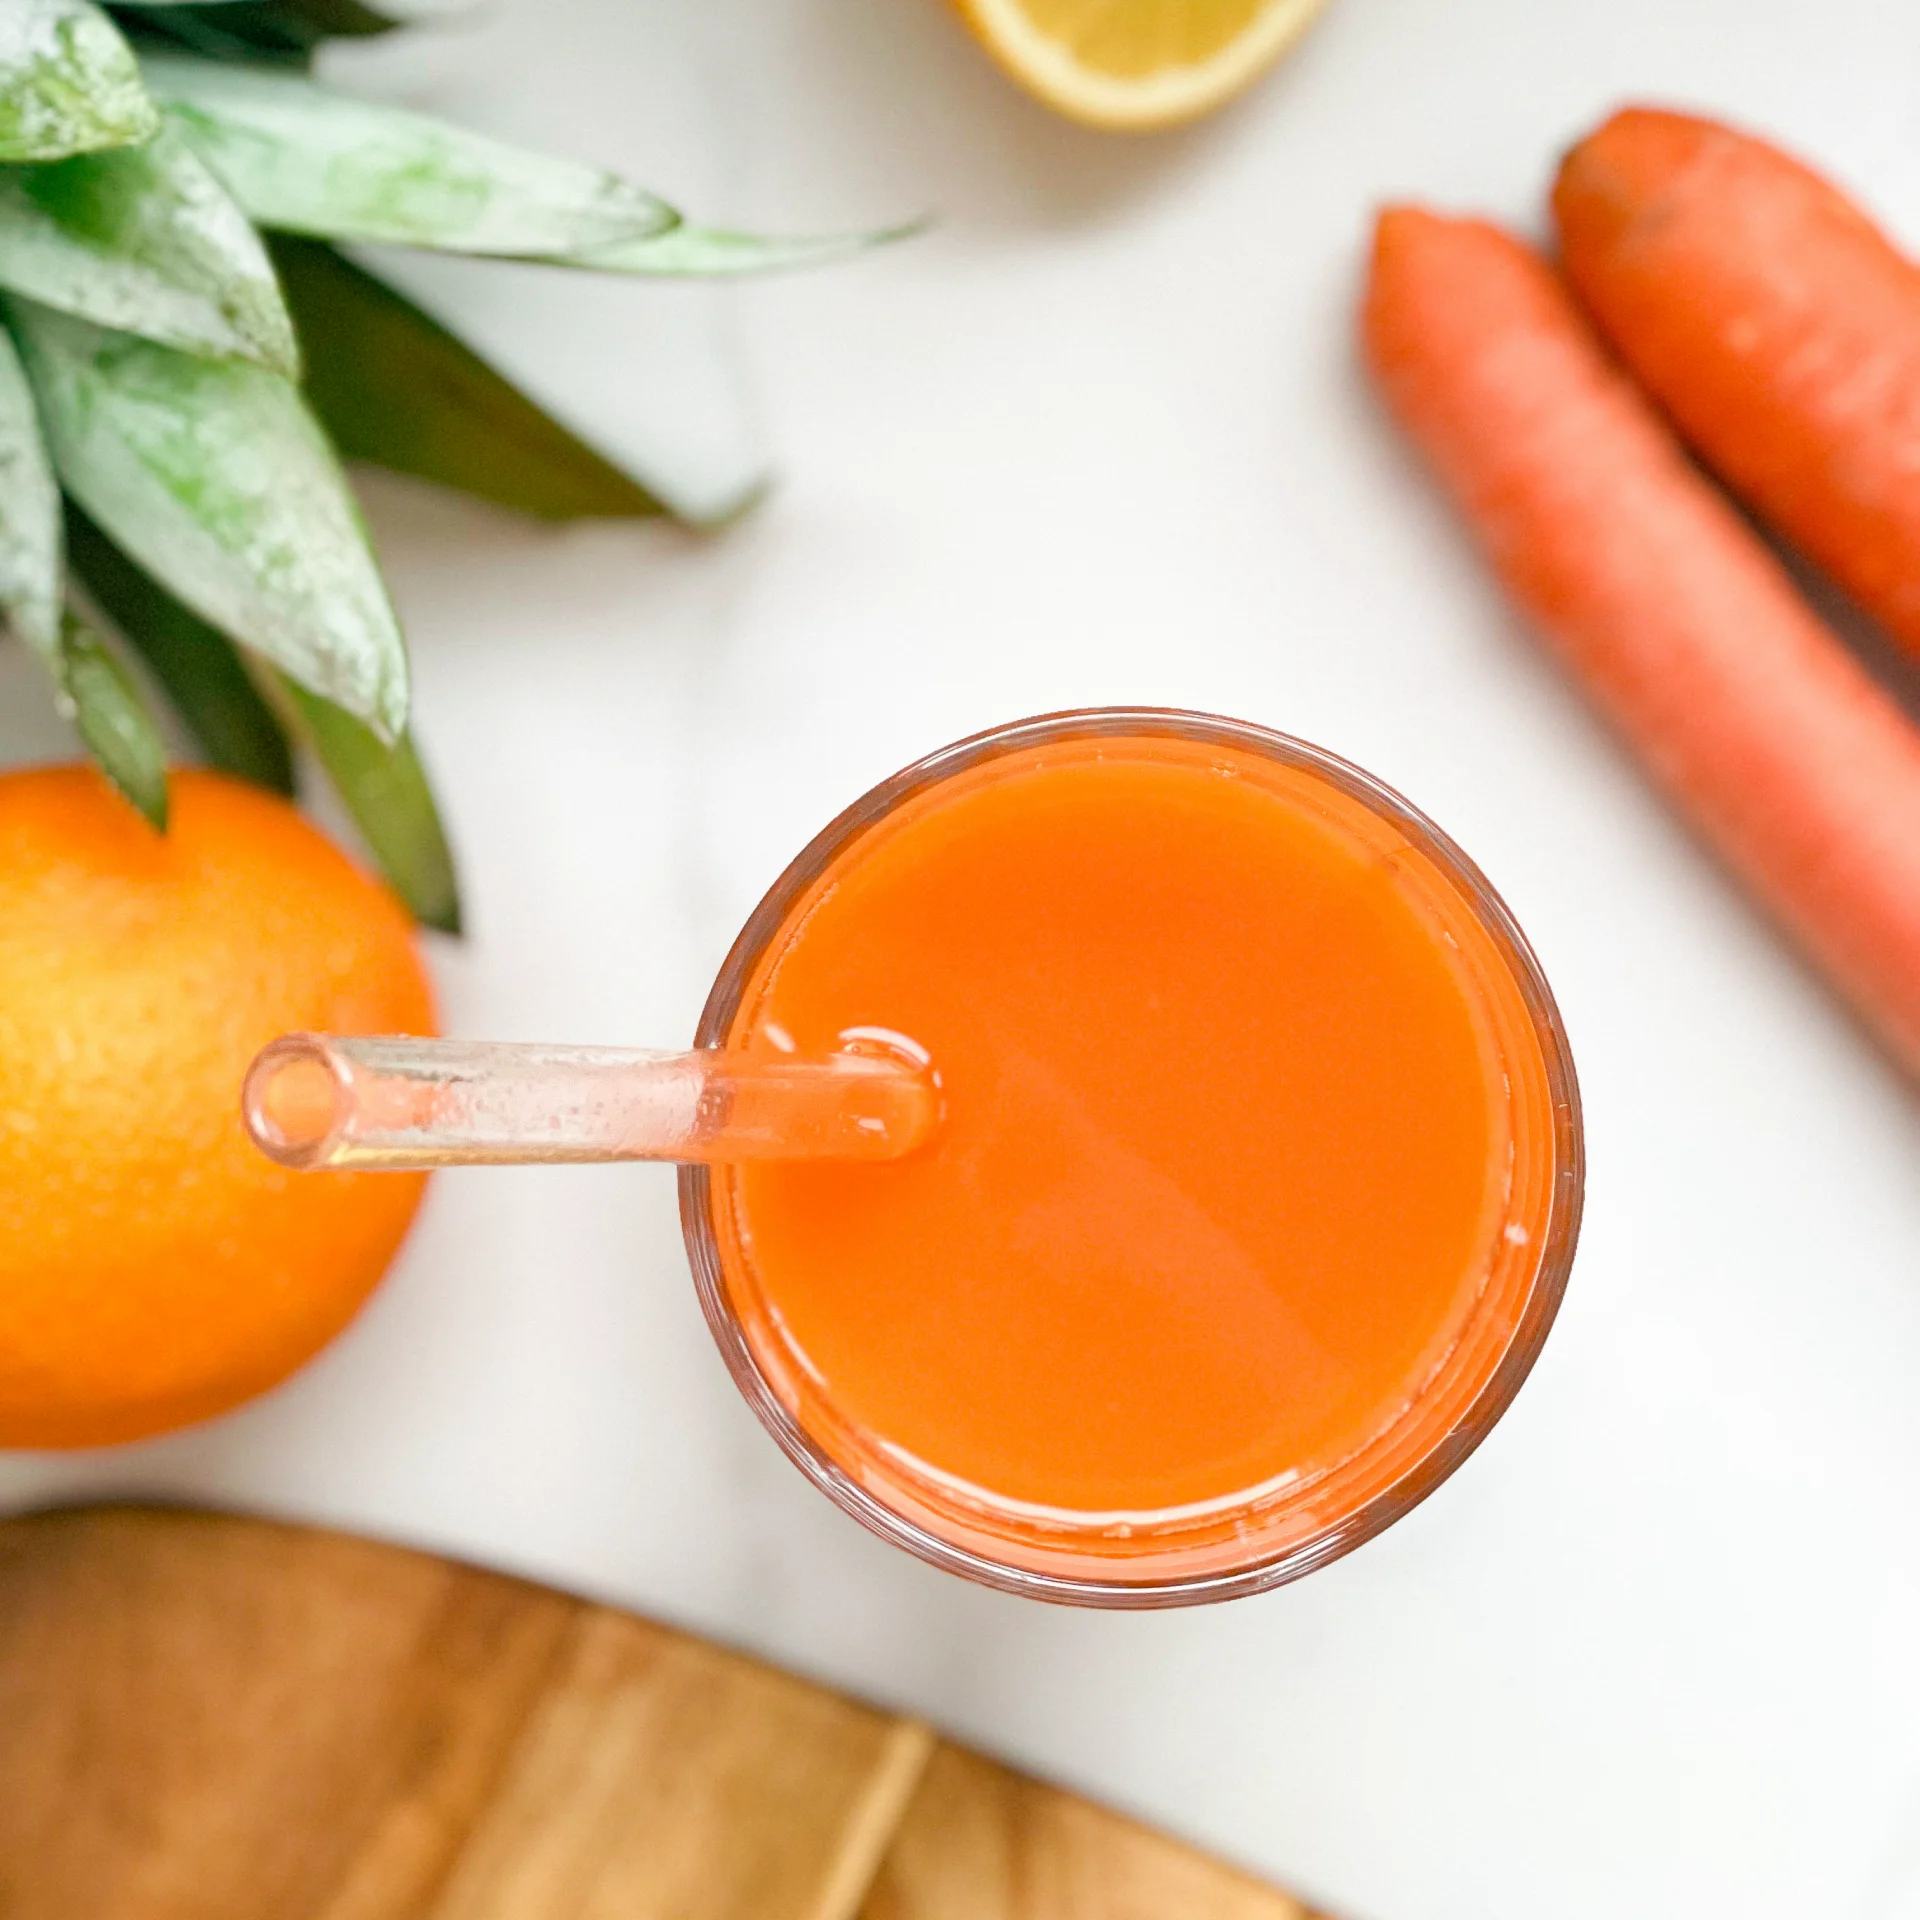 Skin Glowing Pineapple Carrot Juice